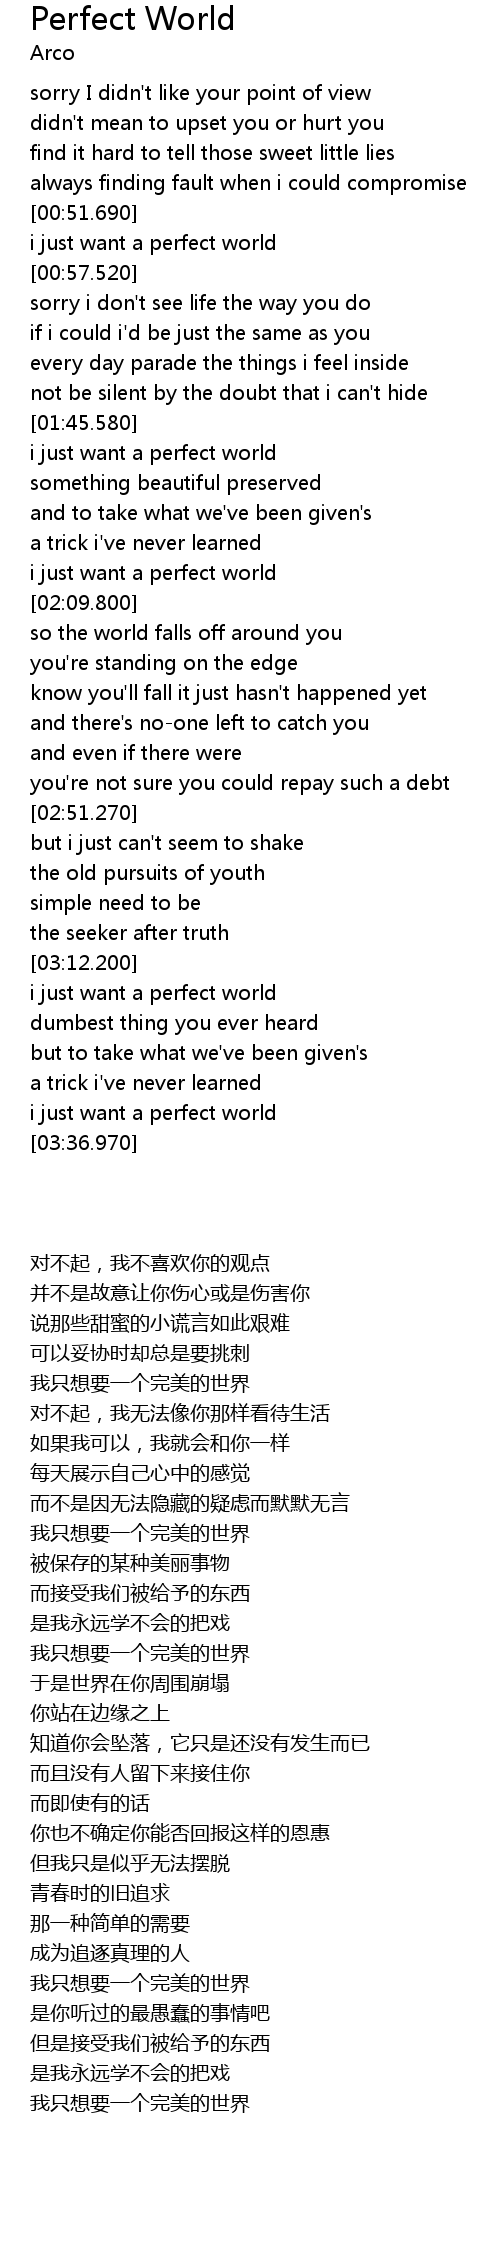 Lyrics perfect world